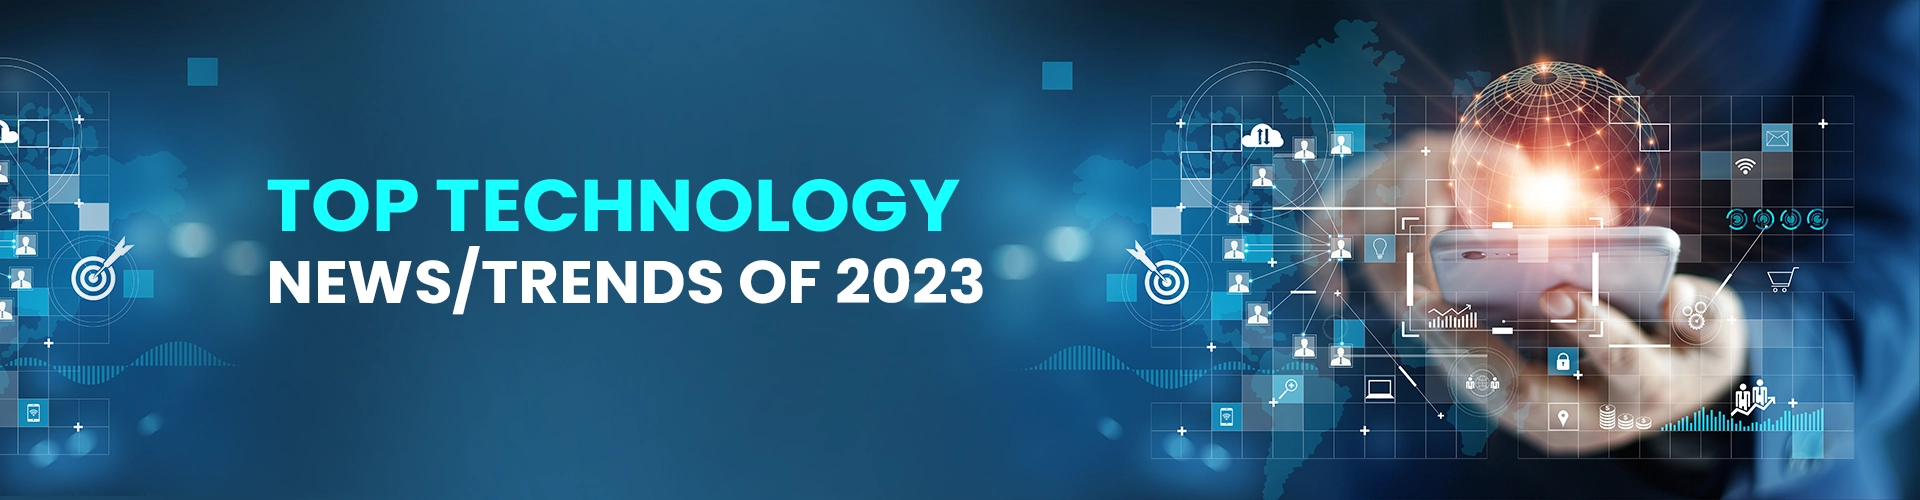 Top Technology News of 2023